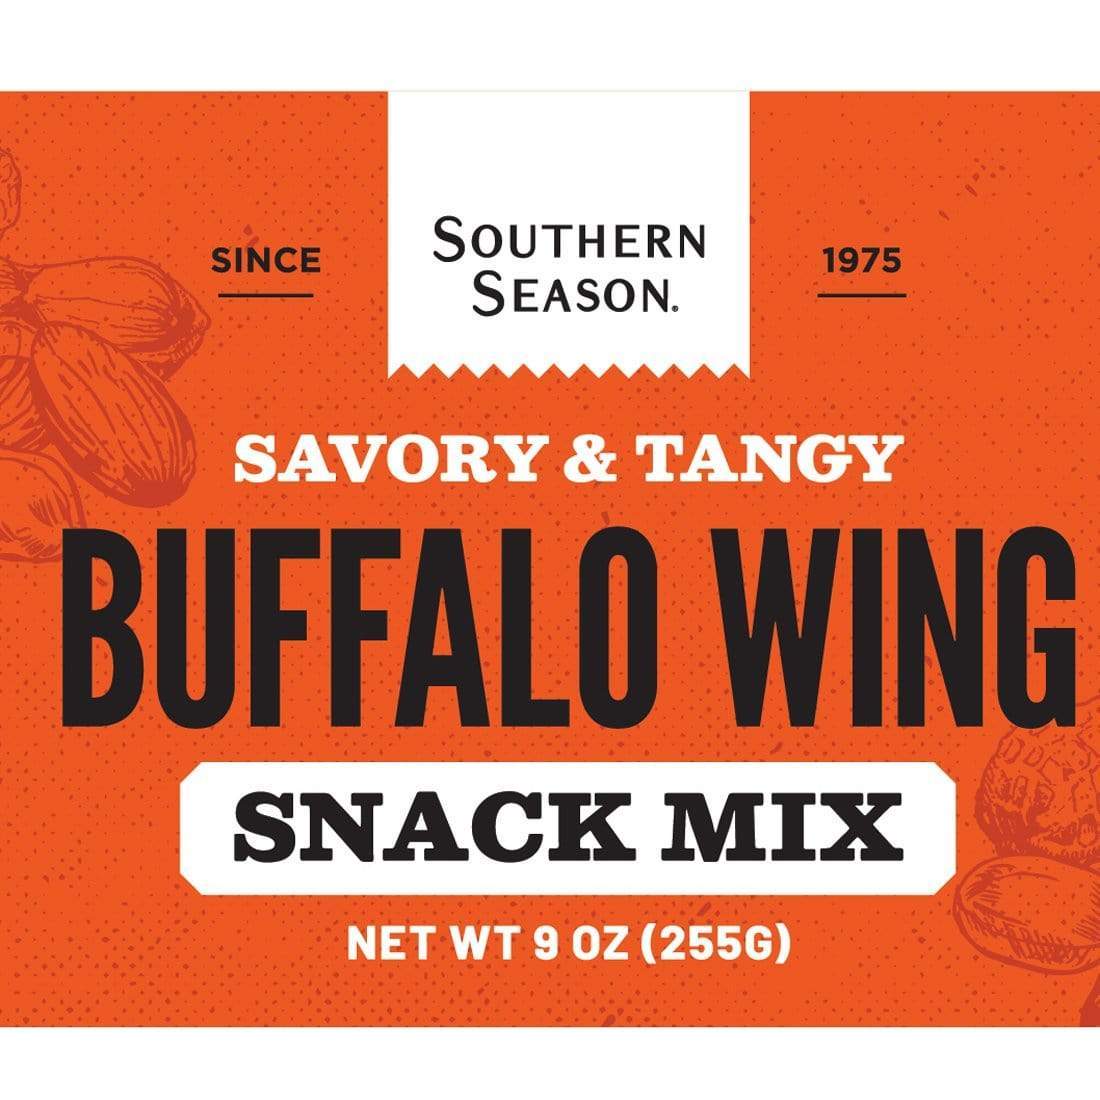 Southern Season Southern Season Buffalo Wing Snack Mix 9 oz